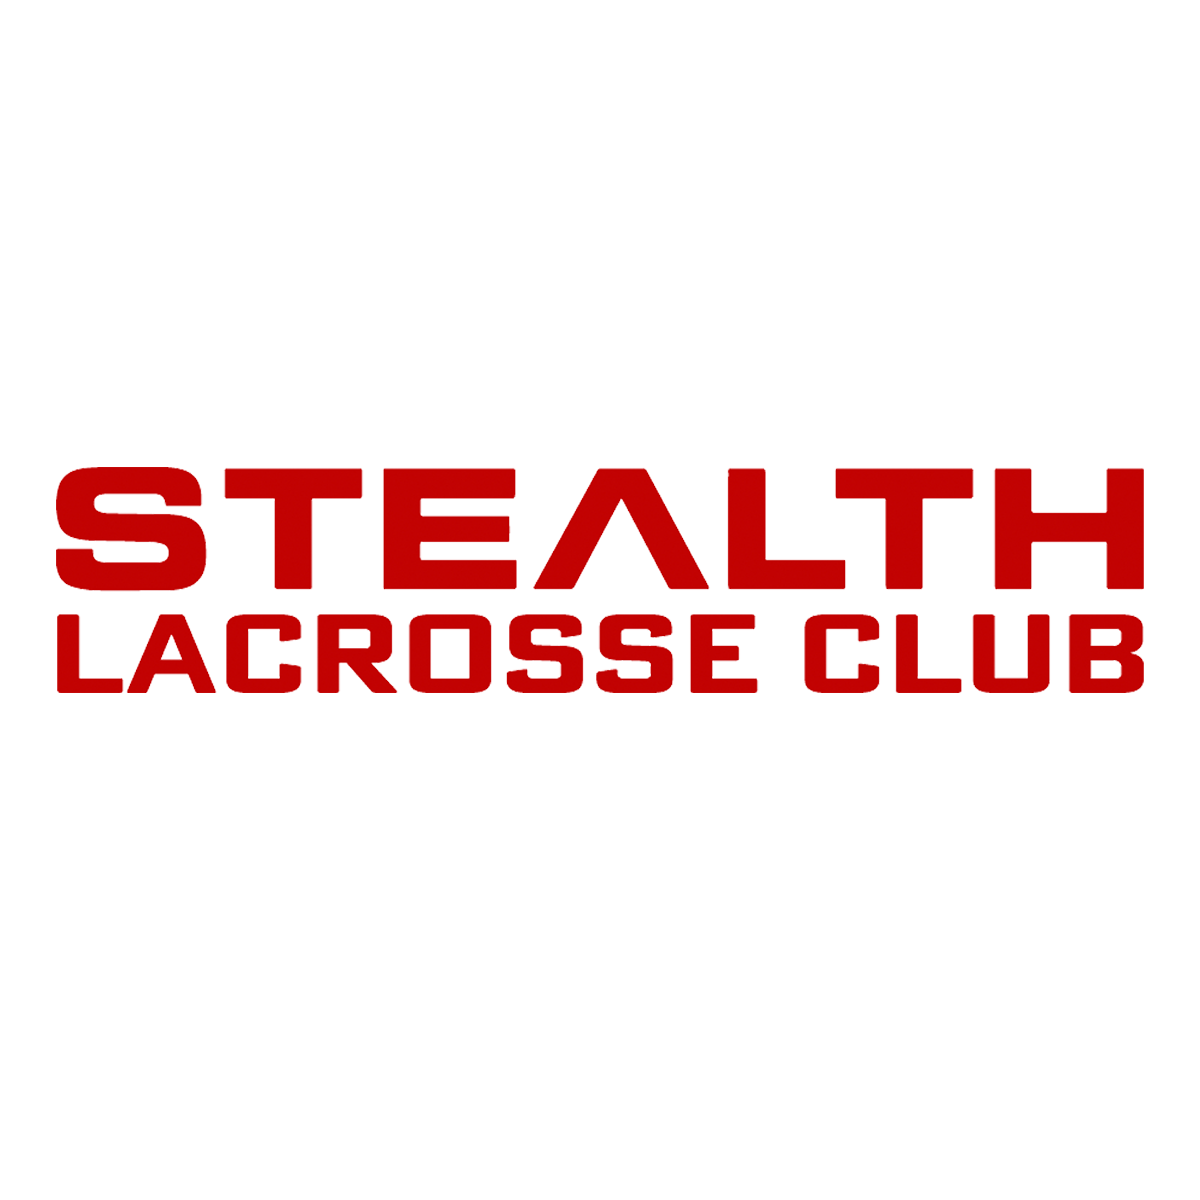 Stealth Lacrosse Club Sticker 2-Pack